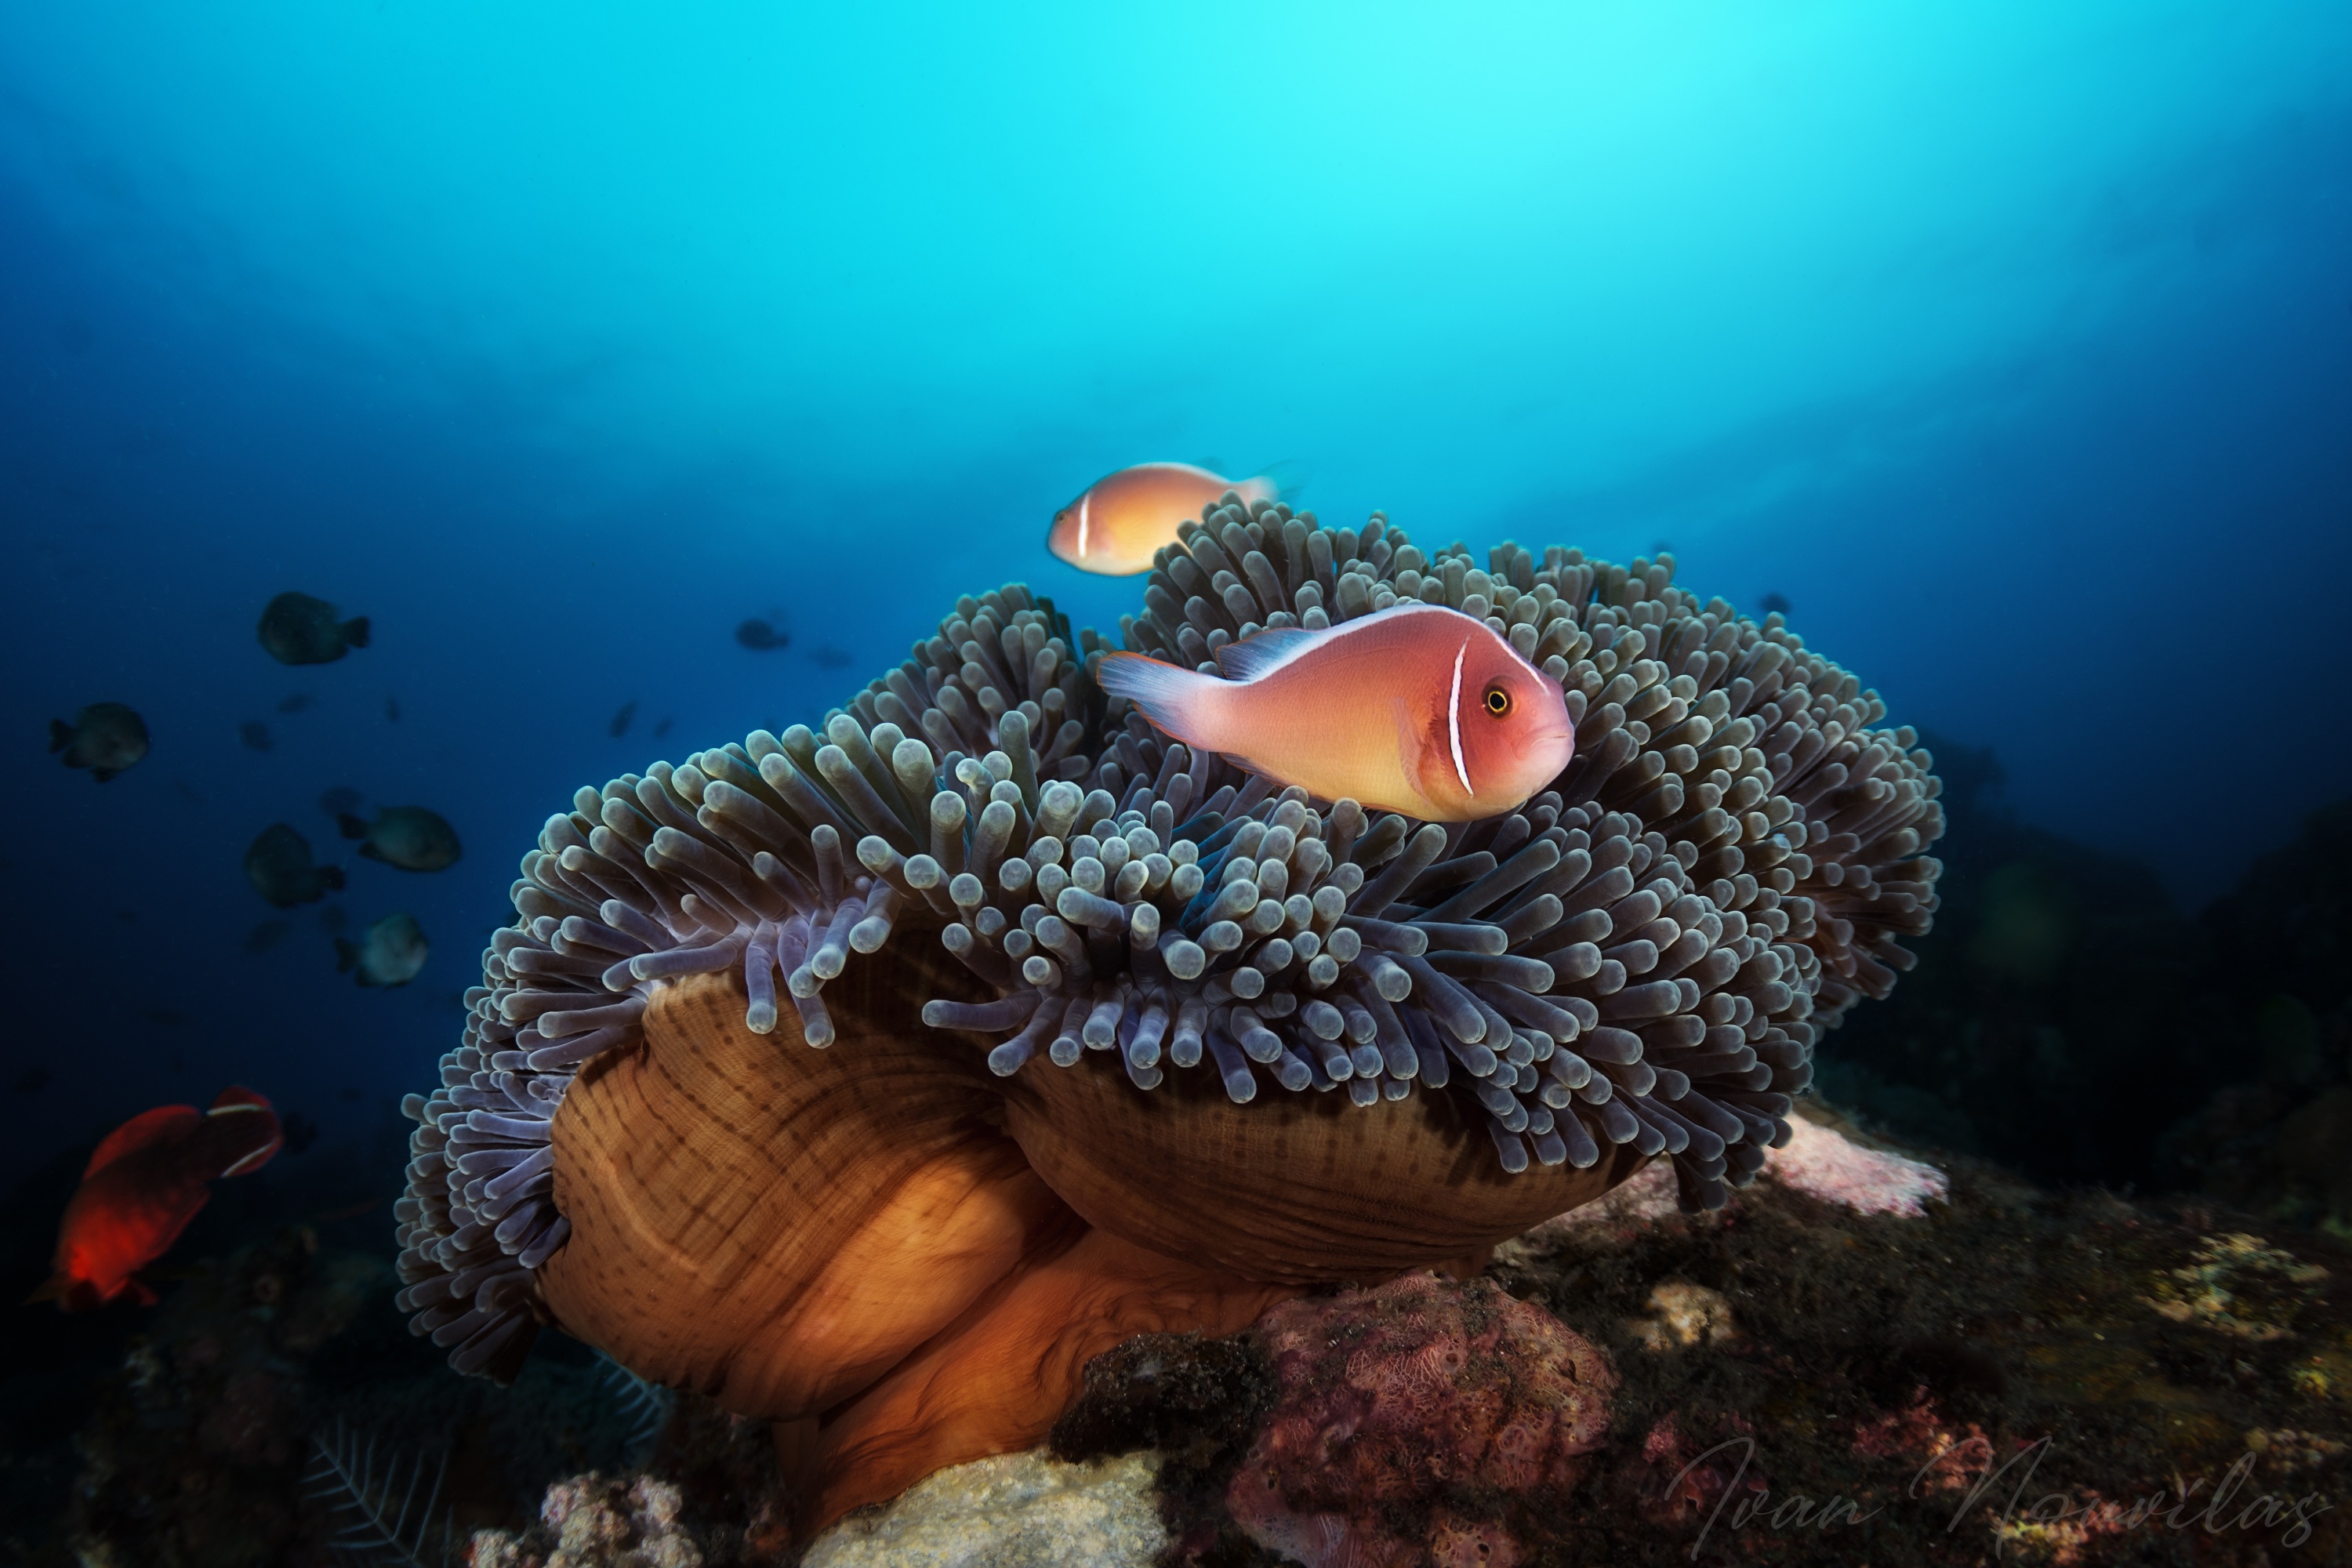 486223 descargar imagen animales, pez, anémona de mar, submarina, peces: fondos de pantalla y protectores de pantalla gratis